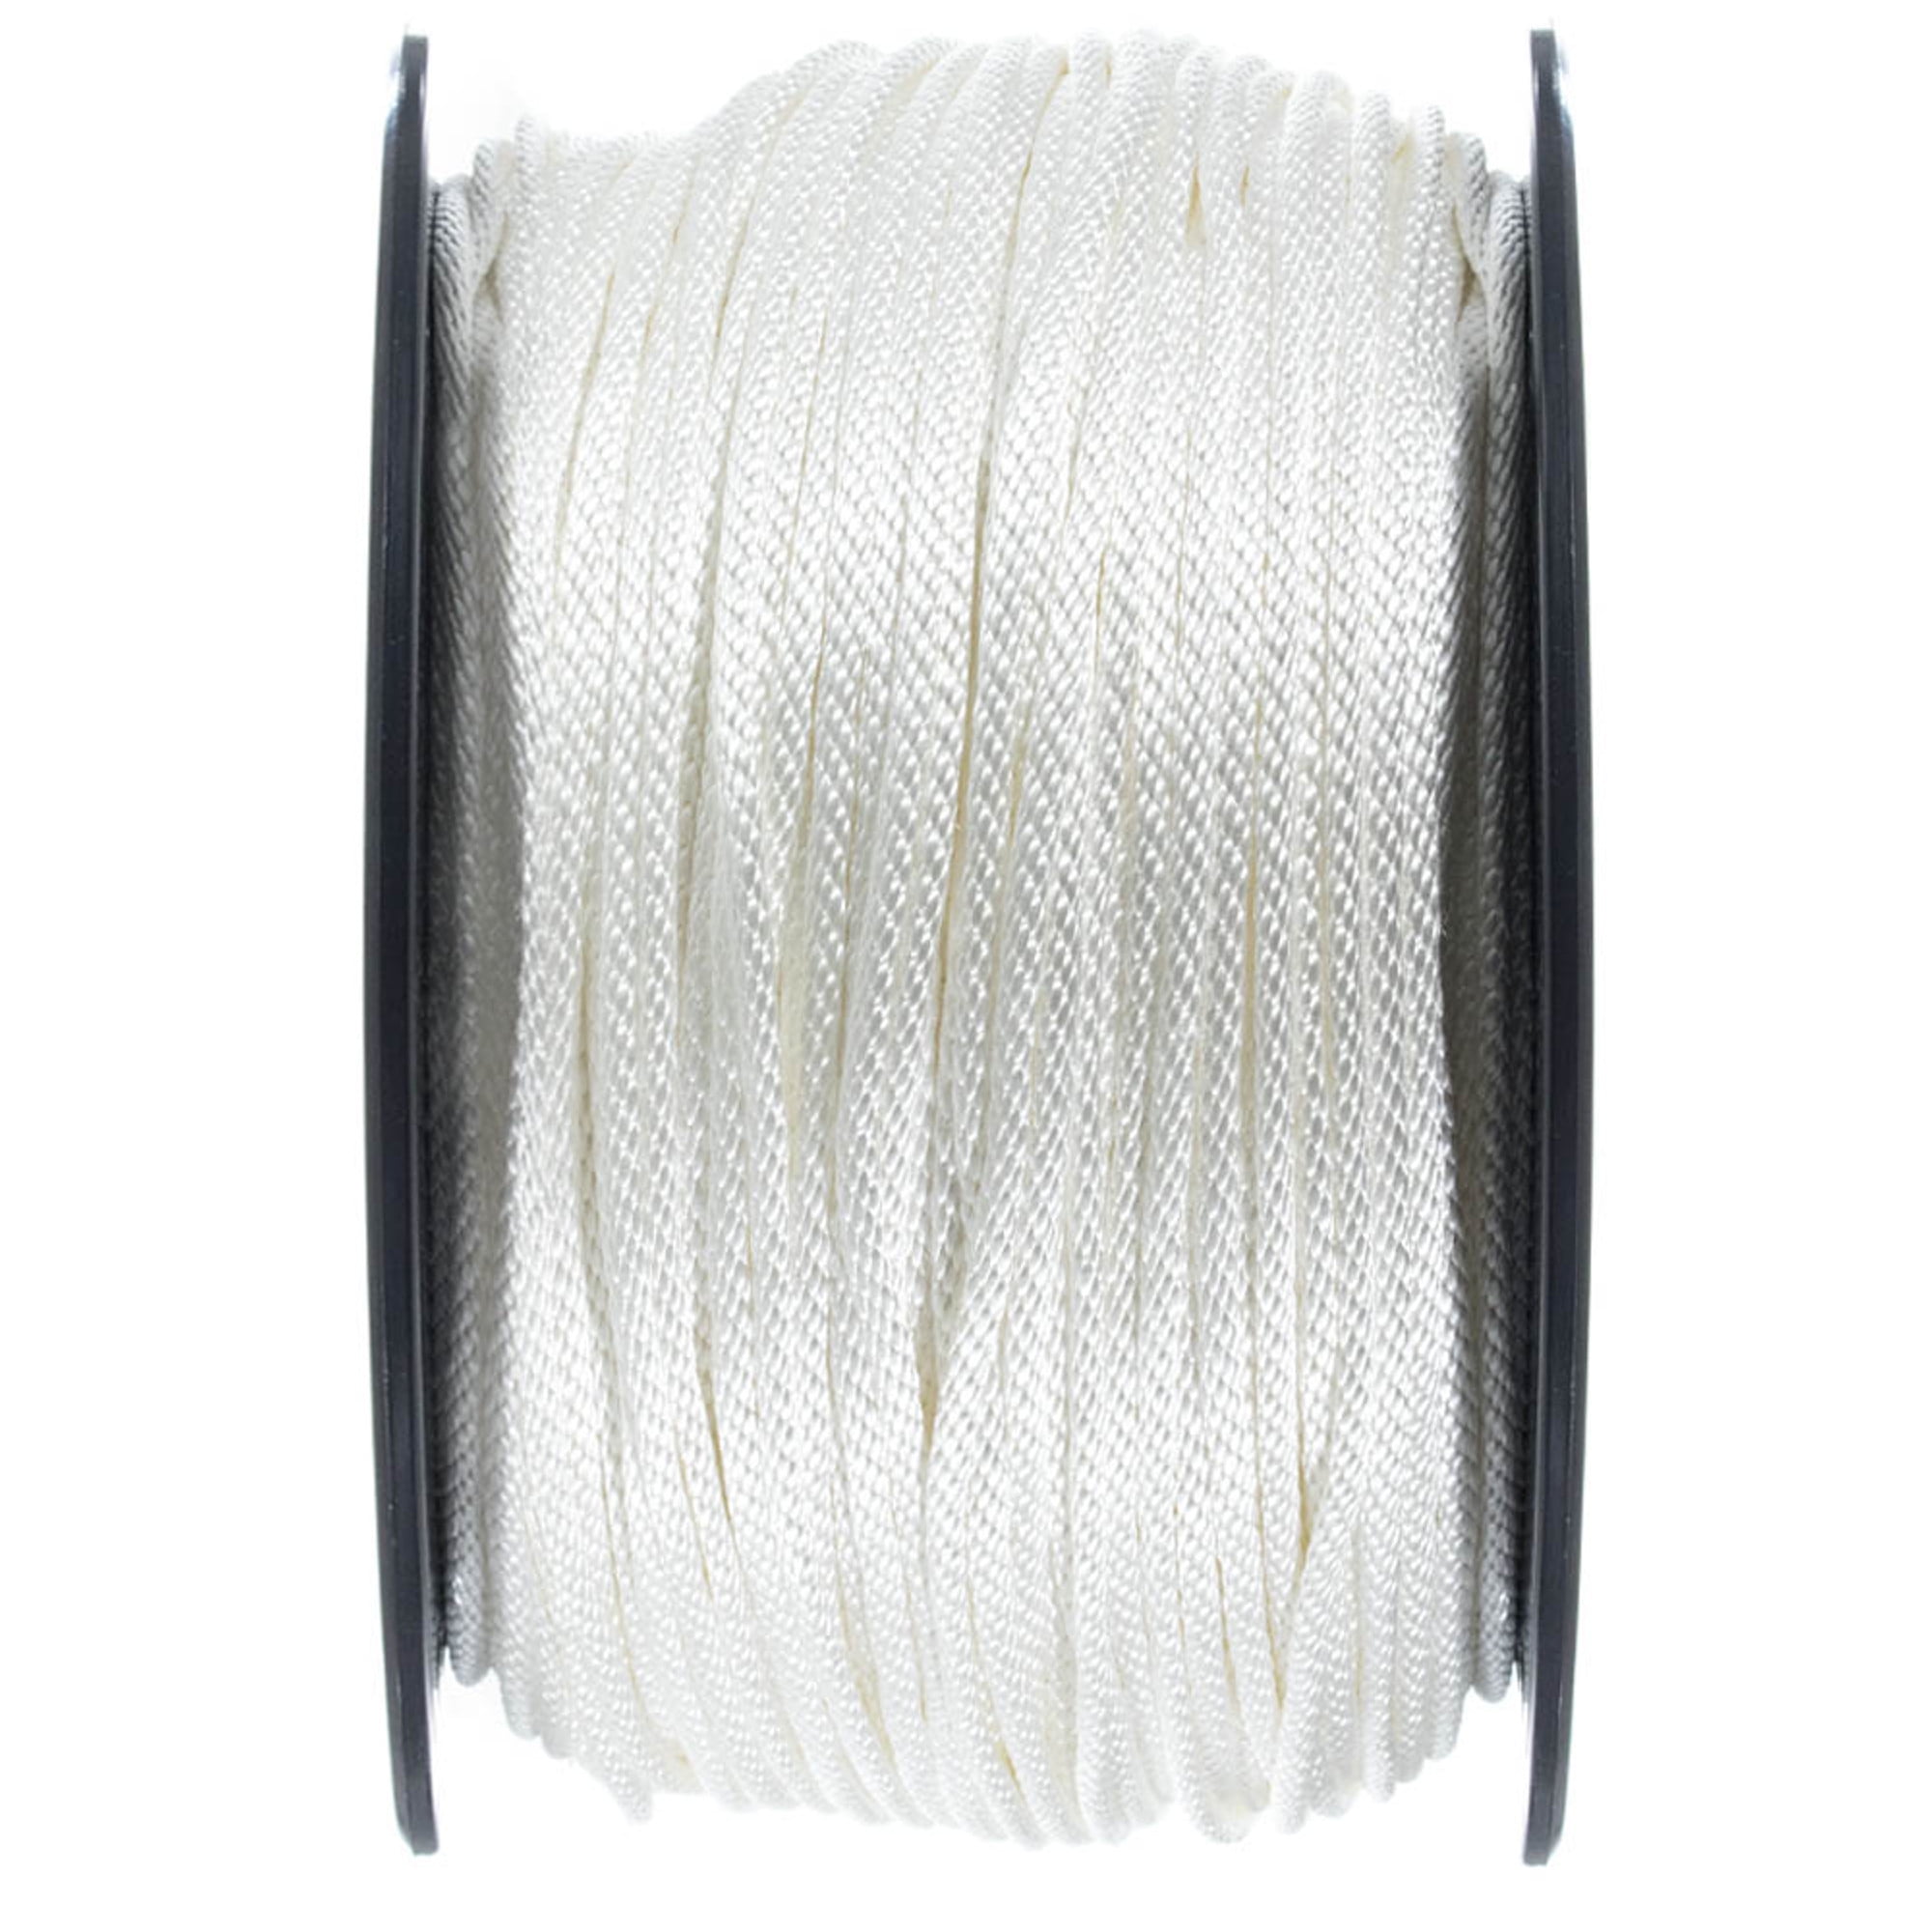 spool of 3/16" hollow braid Polyethylene rope 500 ft Blue/white.USA 